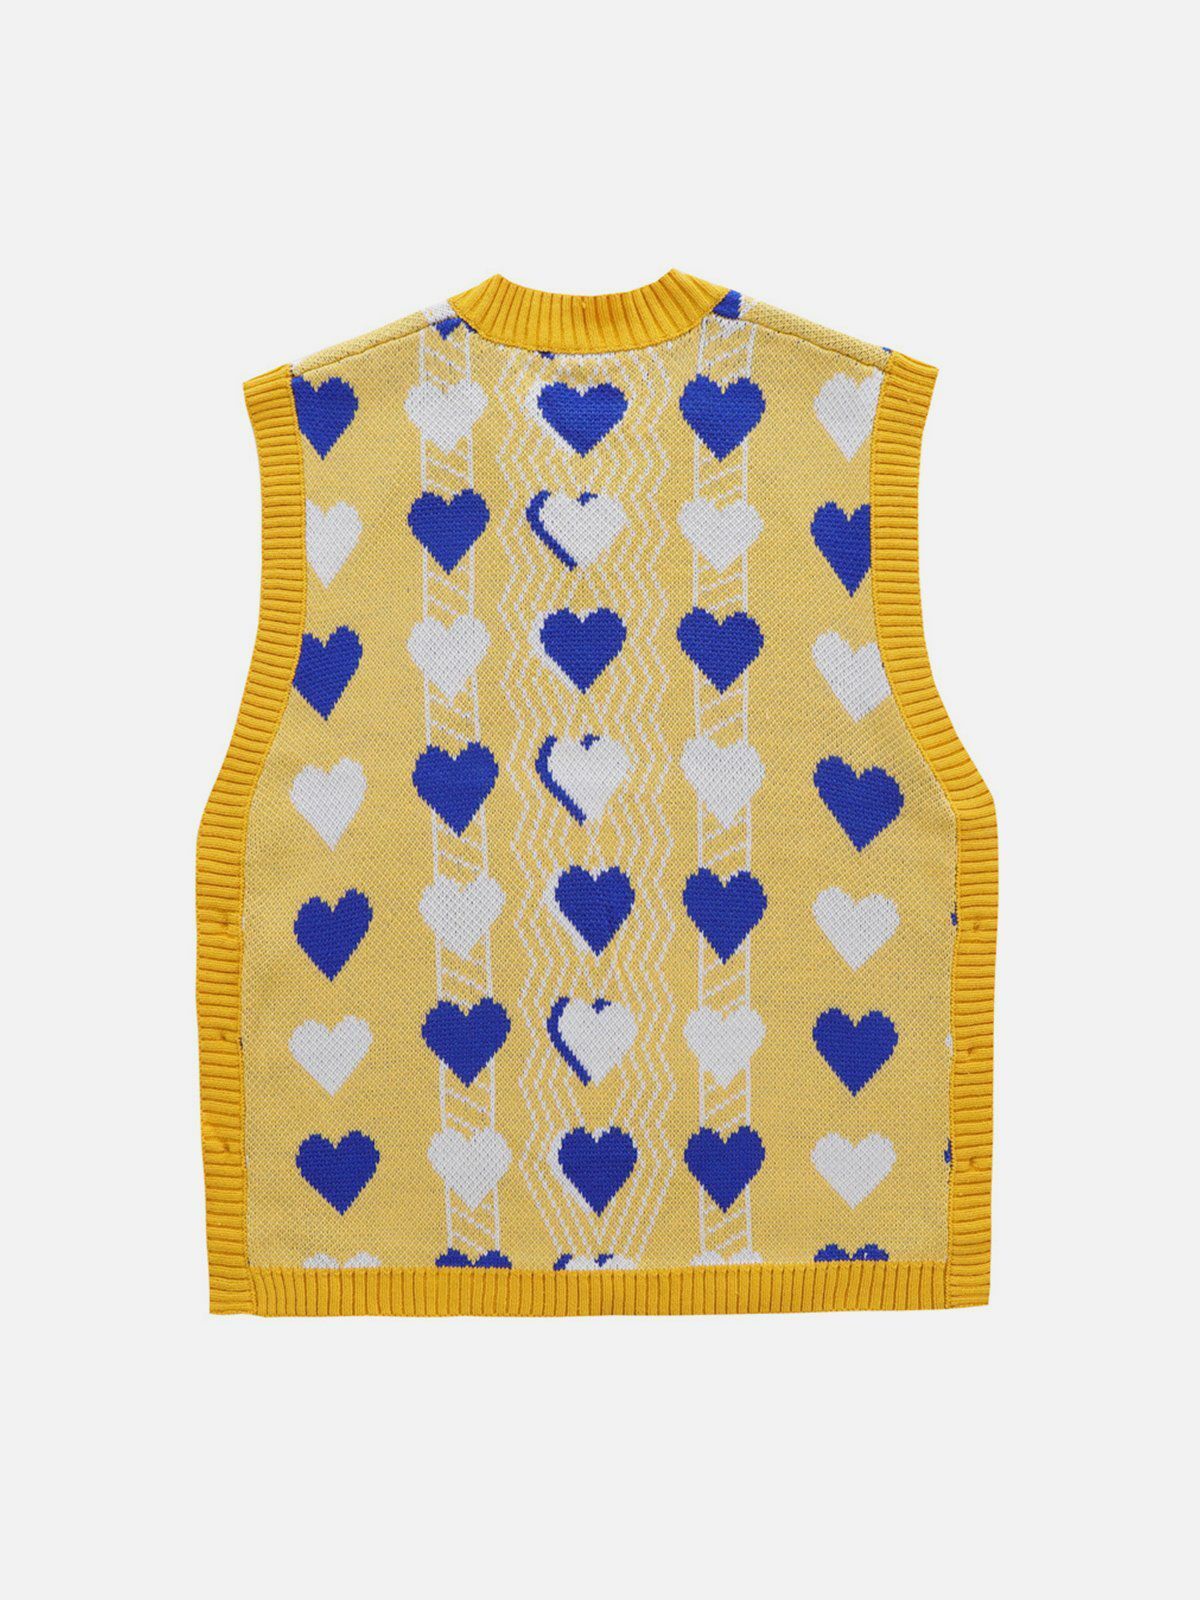 retro clash sweater vest edgy  colorful y2k fashion 6971